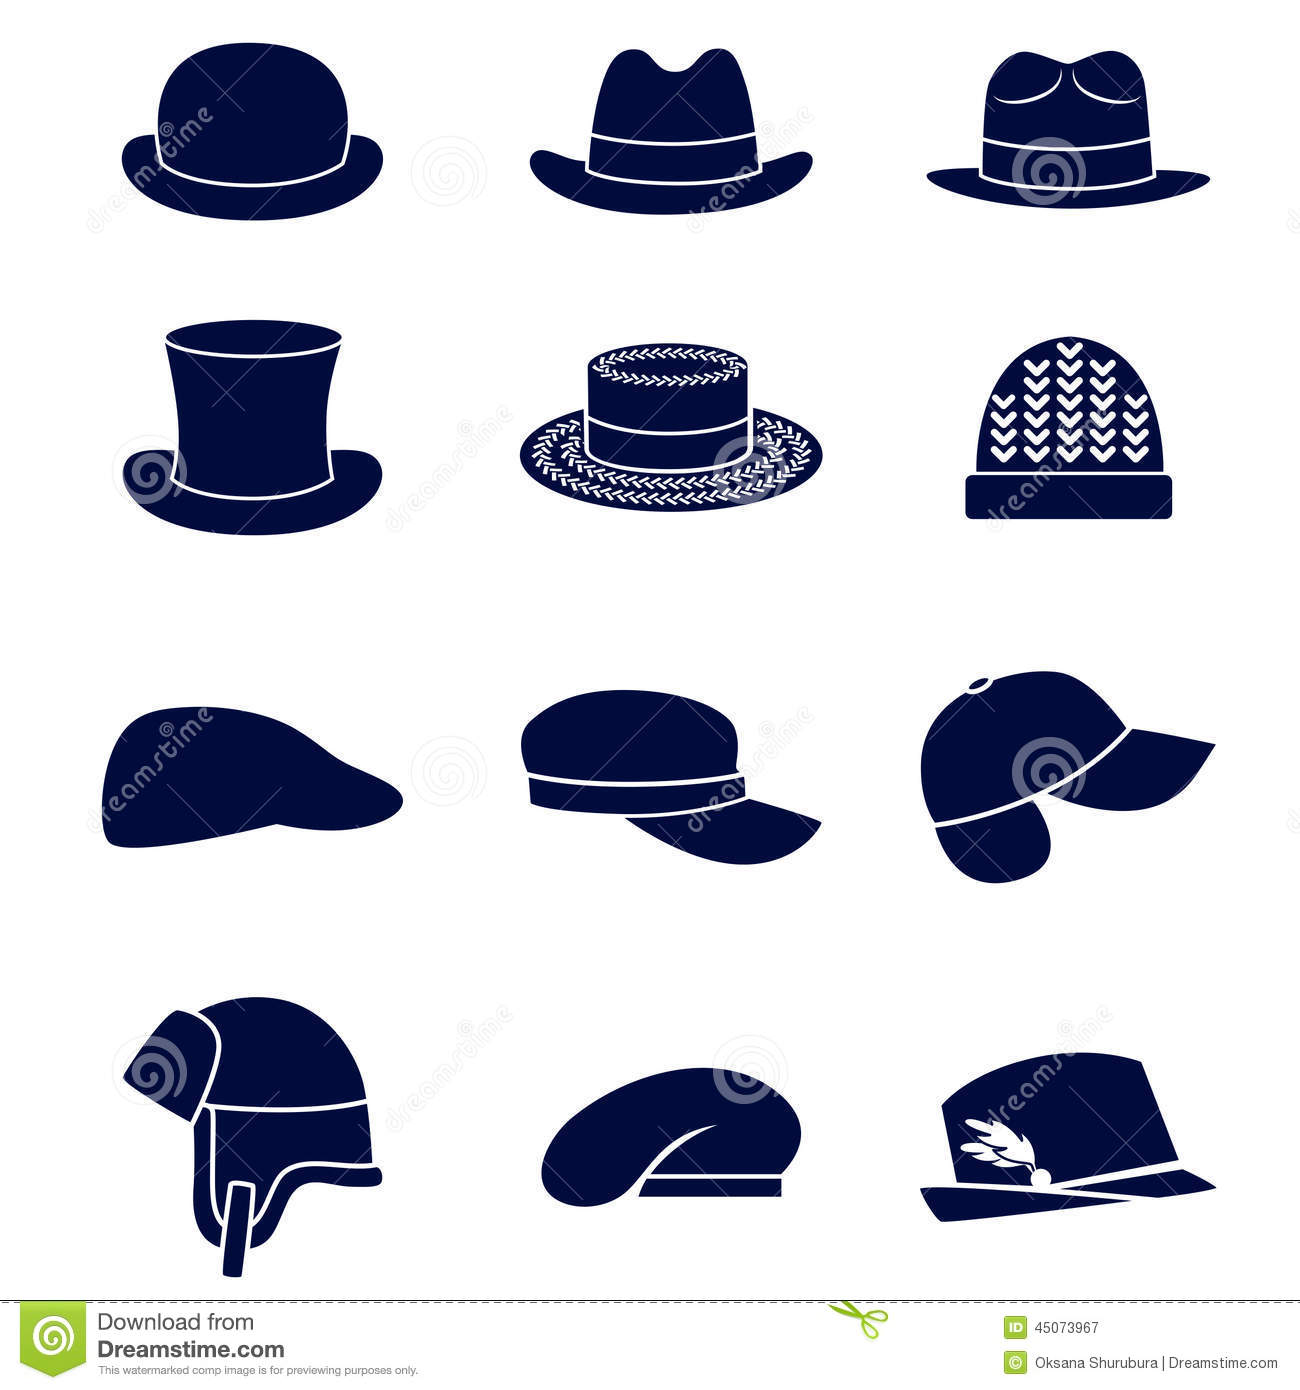 Solid Fill Vector Icons Of Hats Mr No Pr No 0 1405 0